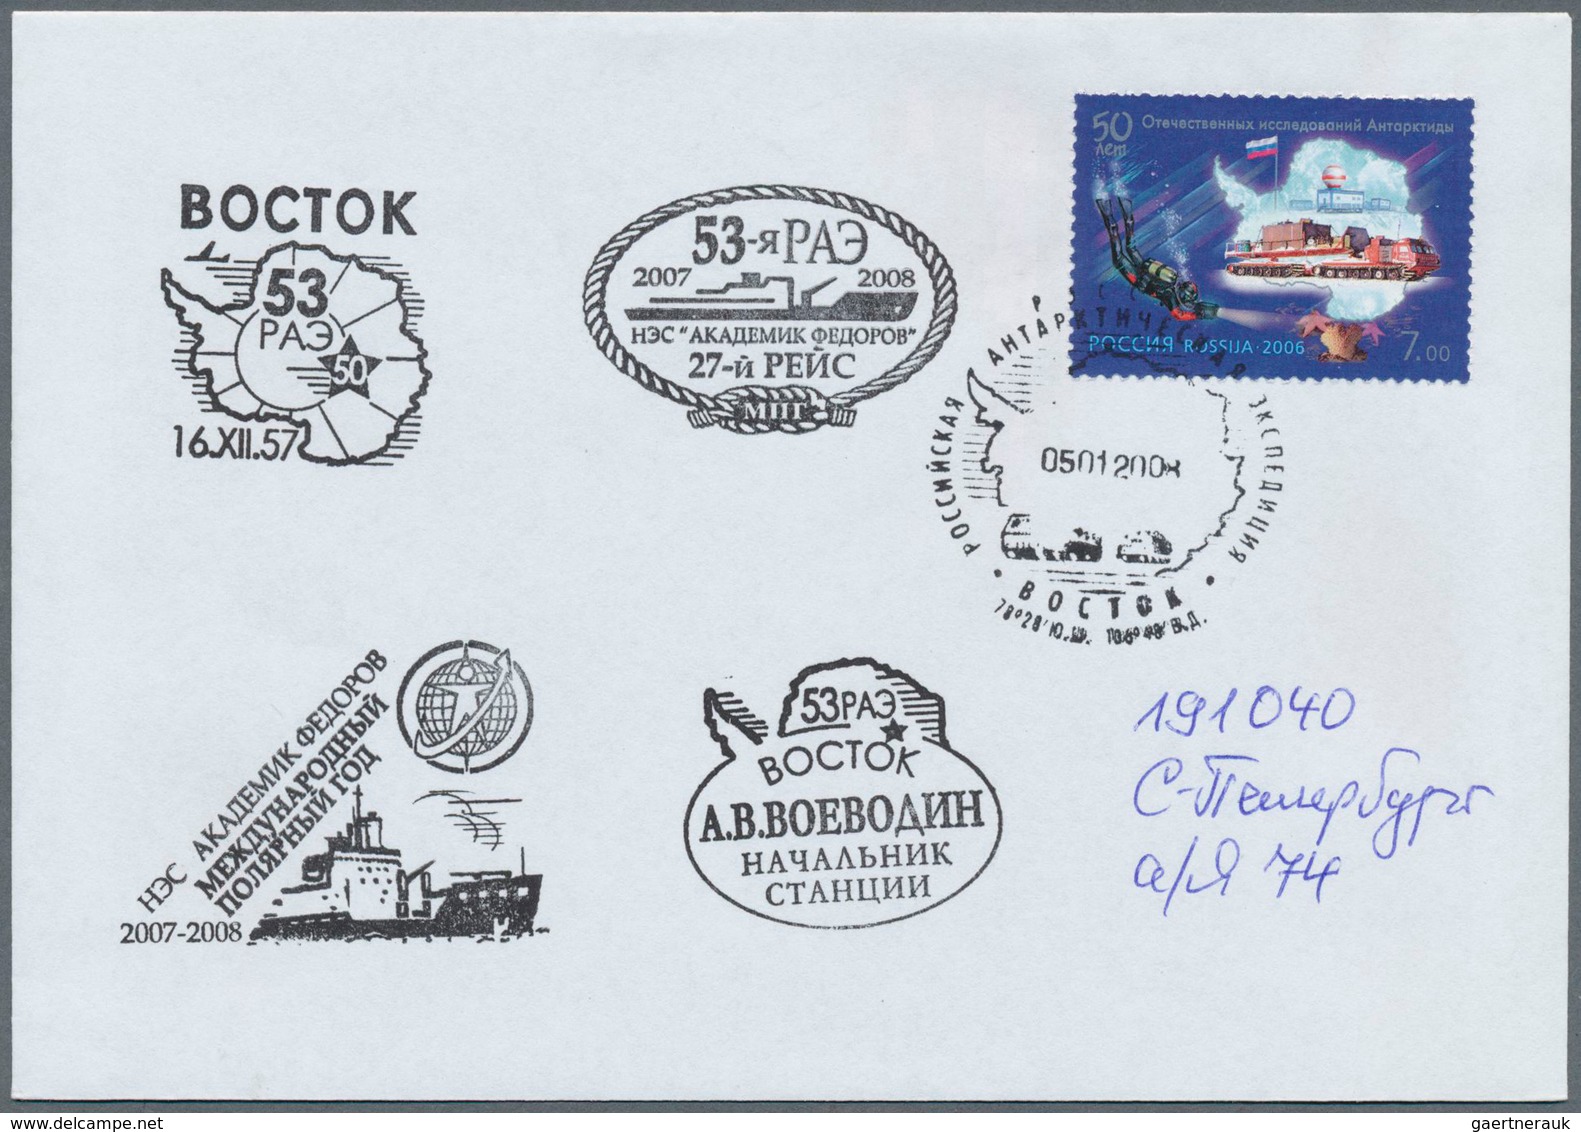 Thematik: Antarktis / antarctic: 1960/2010 (ca.), SOVIET/RUSSIAN ANTARCTIC ACTIVITIES (incl. a few A